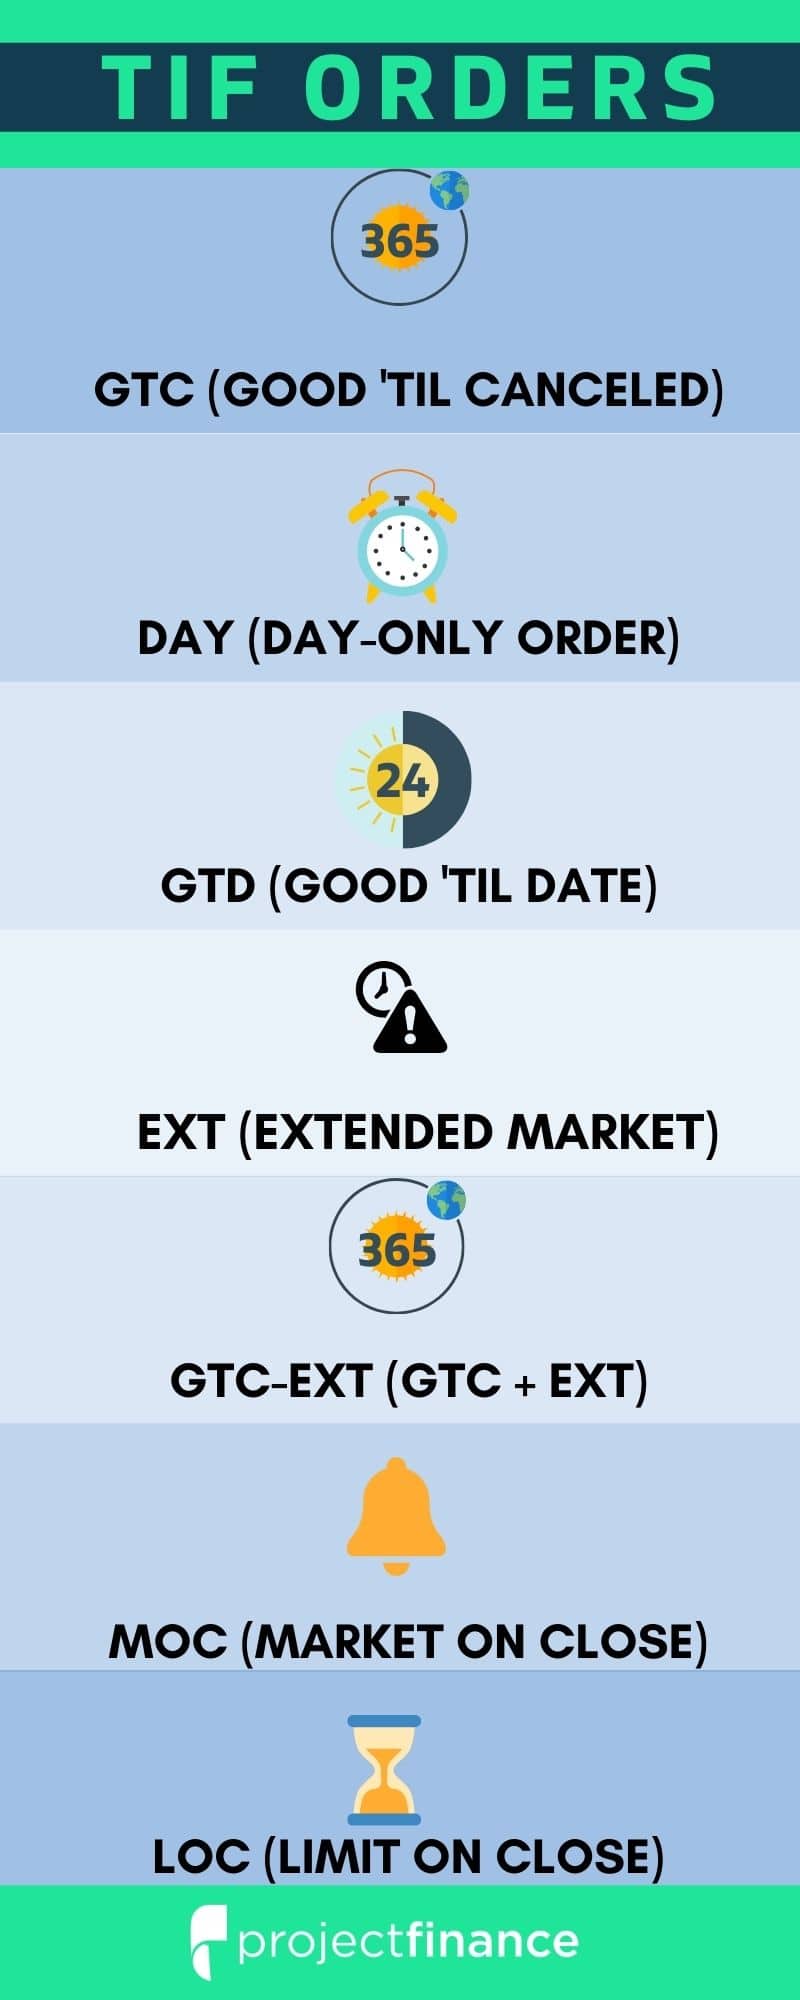 TIF Orders Types Explained: DAY, GTC, GTD, EXT, GTC-EXT, MOC, LOC